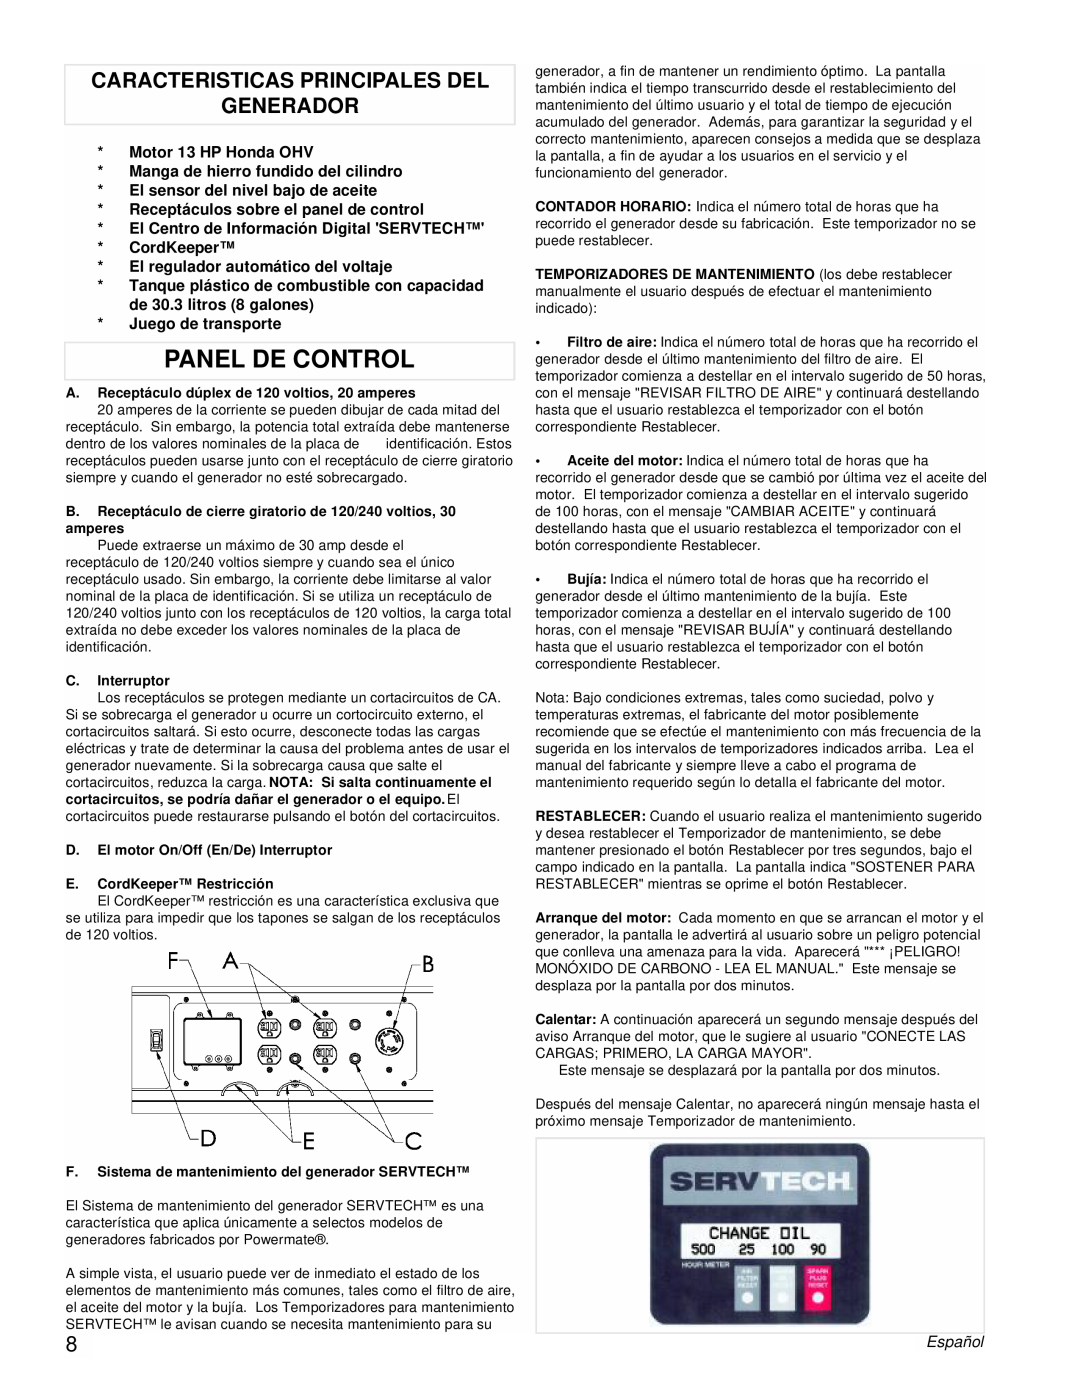 Powermate PM0497002 Panel De Control, Caracteristicas Principales Del Generador, Motor 13 HP Honda OHV, C.Interruptor 